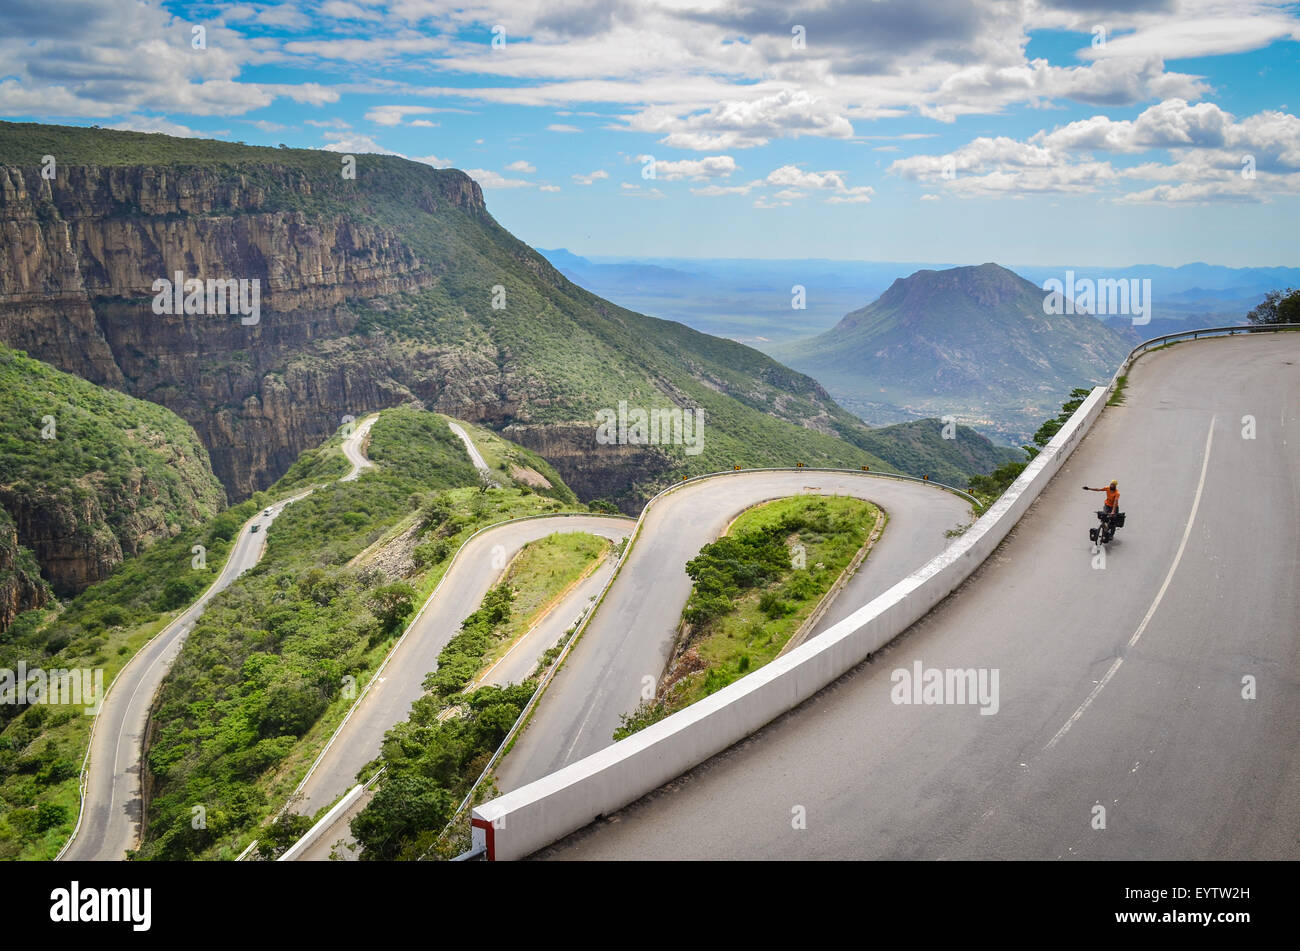 Cyclist on Serra da Leba, a mountain range in Angola featuring the impressive Leba mountain road and its hairpin bends Stock Photo